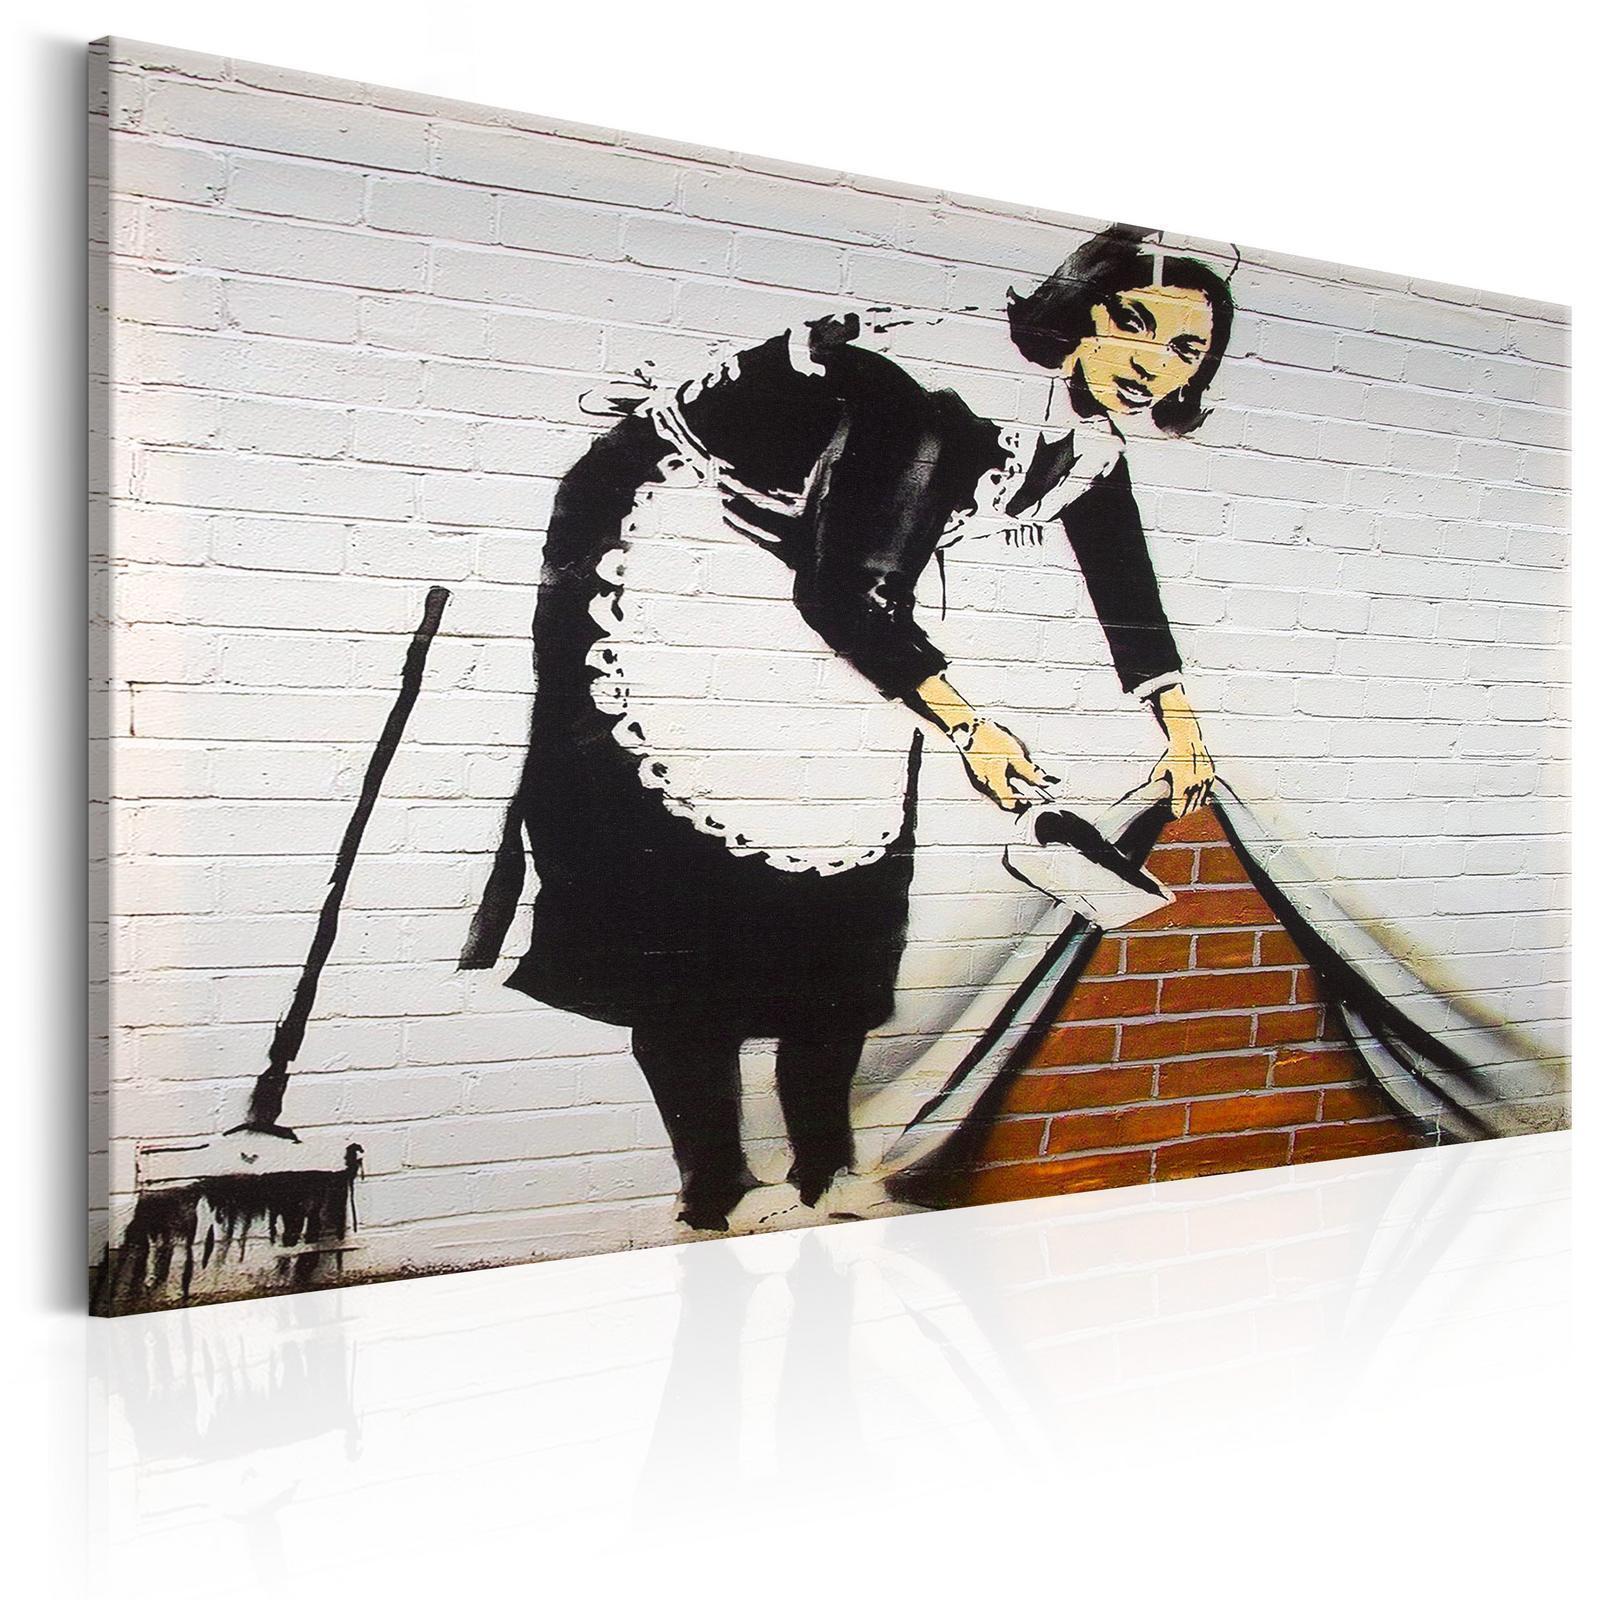 Tableau - Maid in London by Banksy